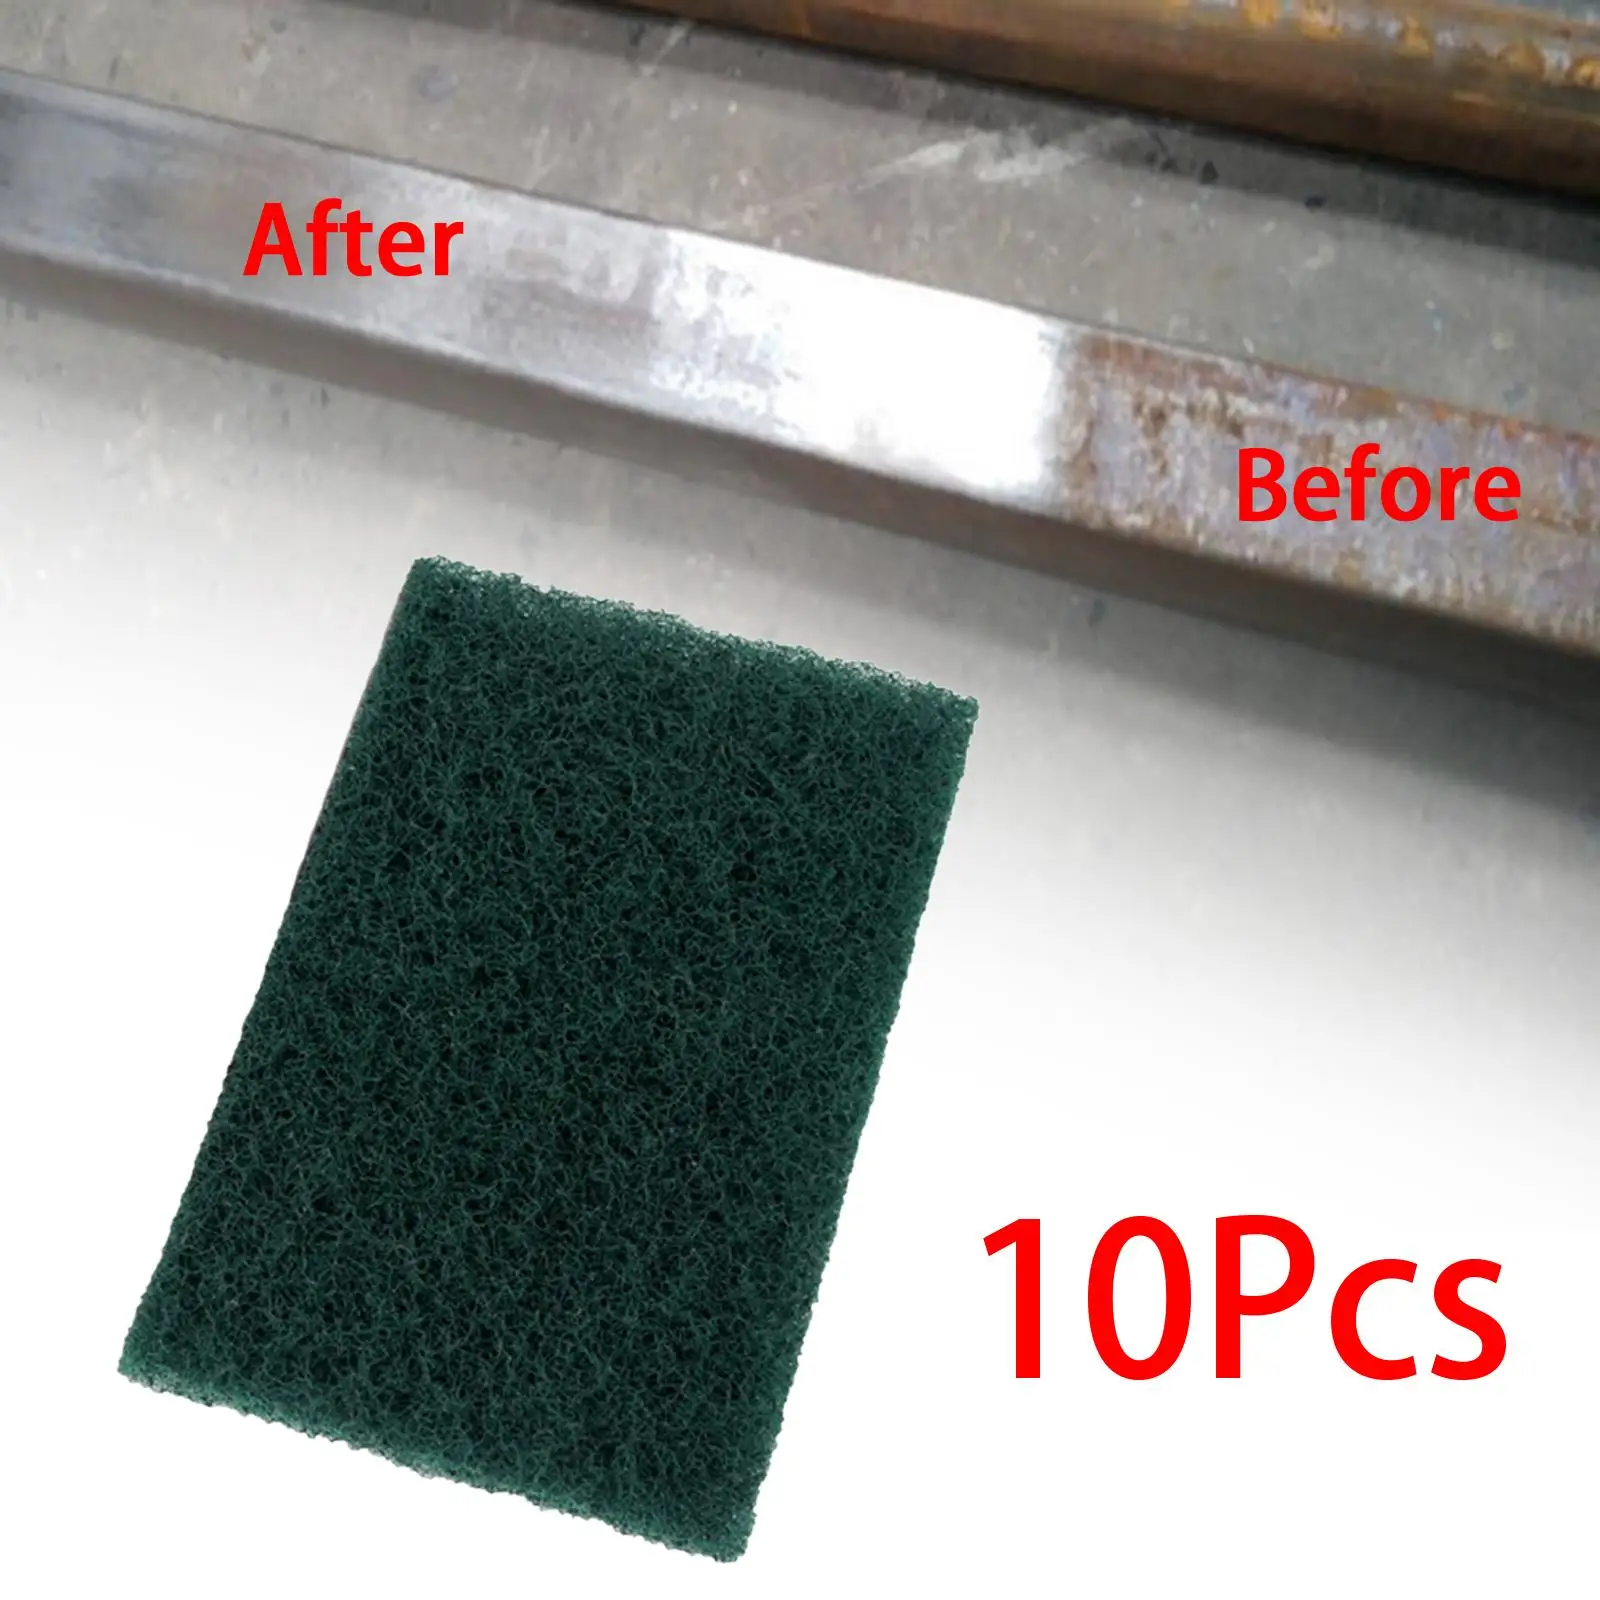 10Pcs Polishing Pads Hand 125 x 200 mm Flexibility Grinding Industrial Abrasive Fleece Pads for Steel Sanding Polishing Wood